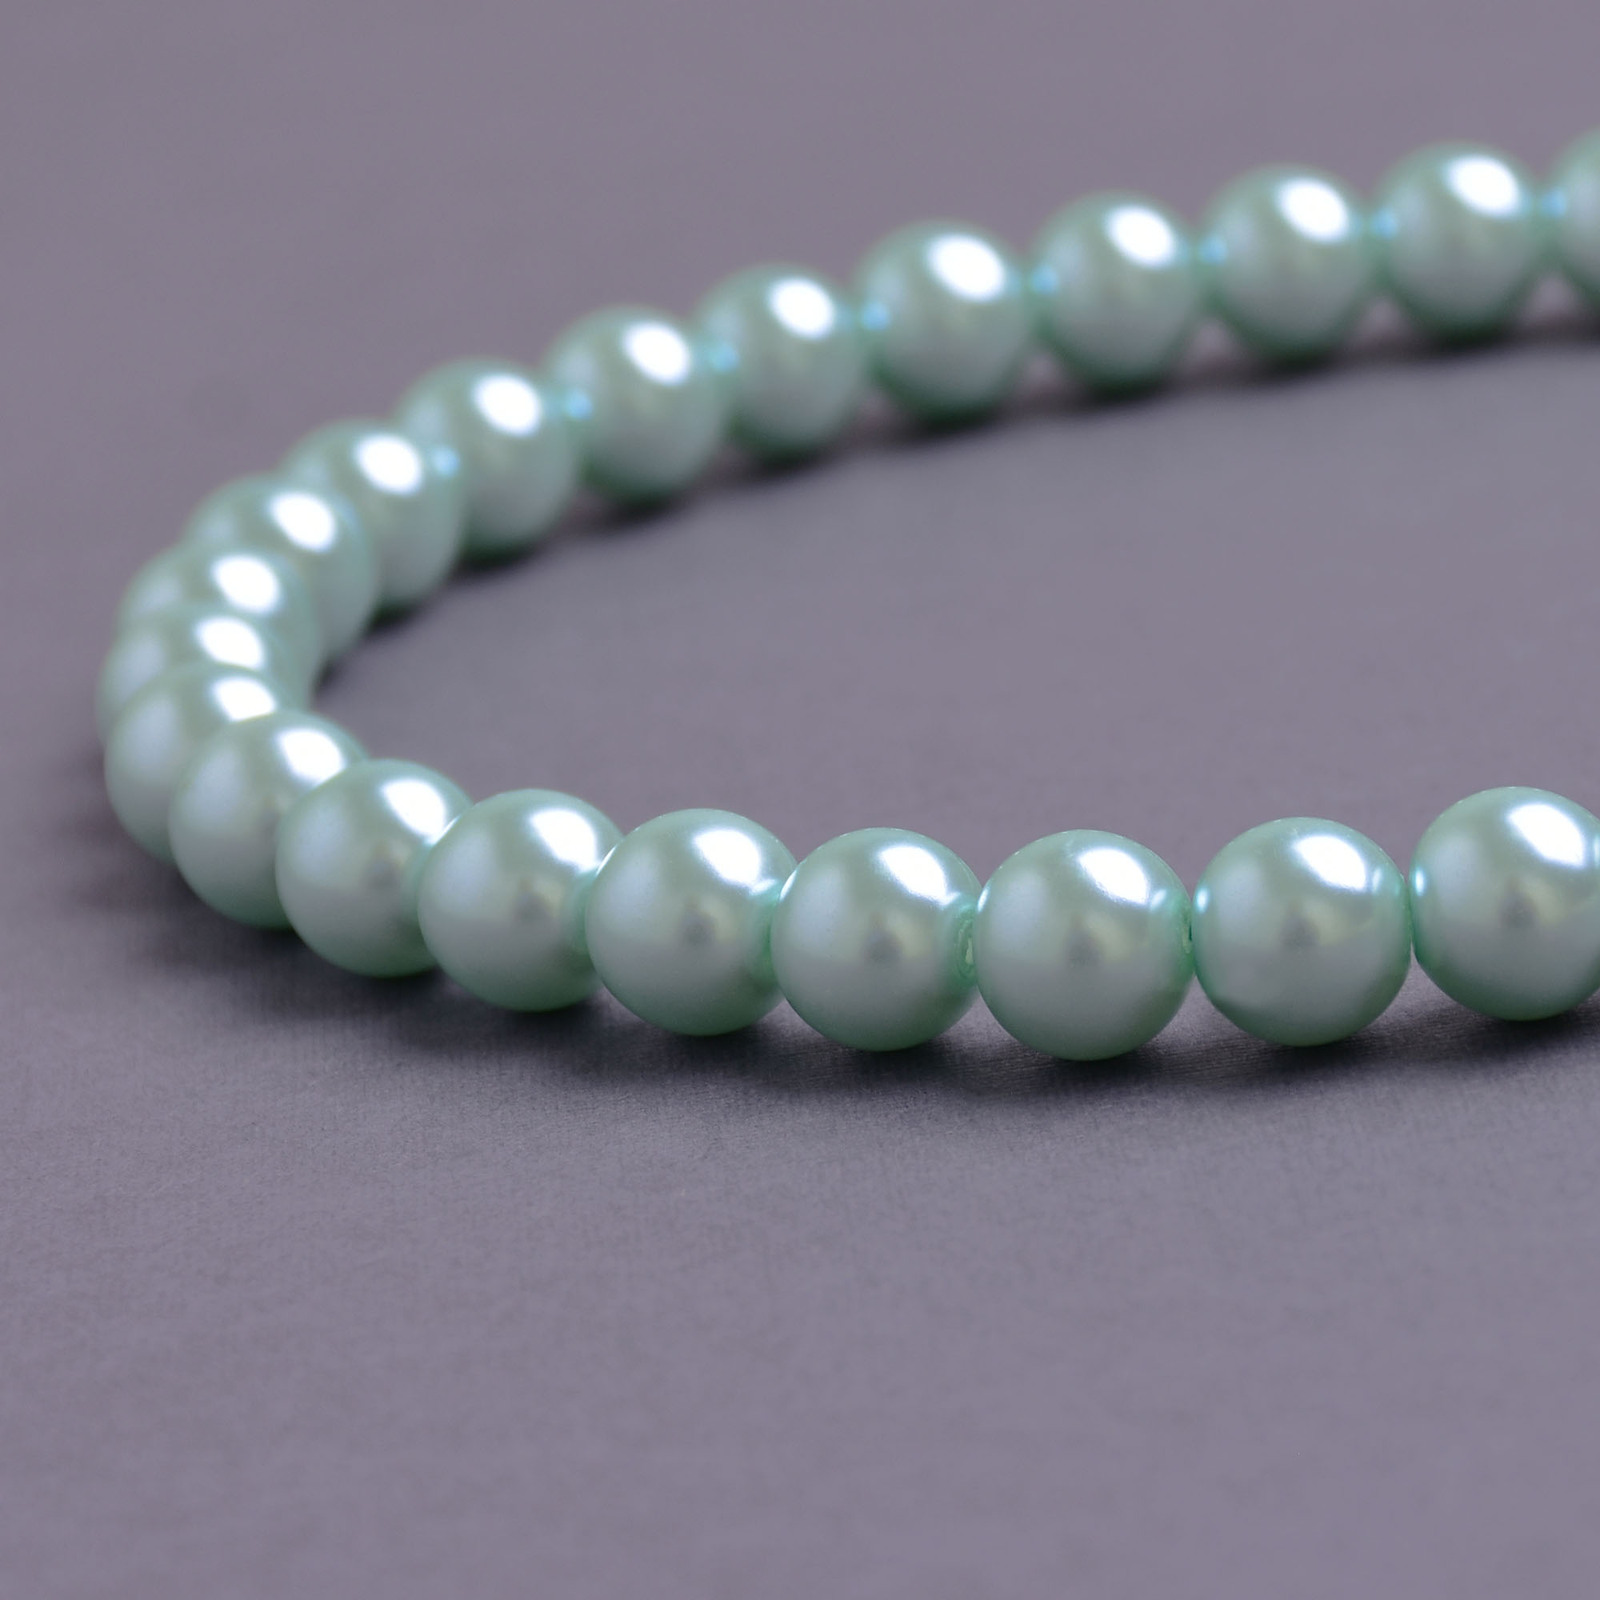 BeadsOne 12mm Mint Green Glass Pearl Beads Jewelry Making 35 pcs round (C41)